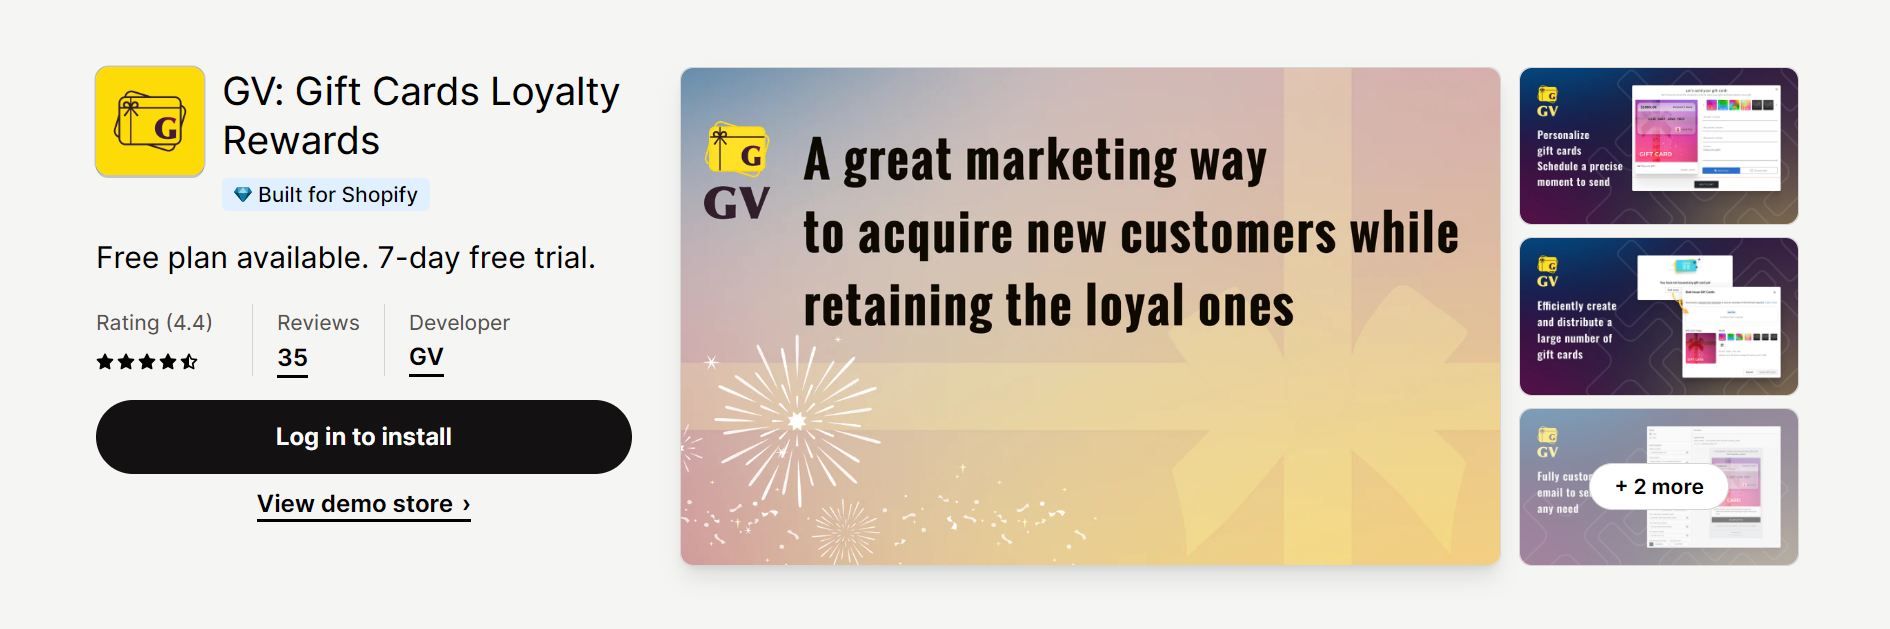 GV: Gift Cards Loyalty Rewards